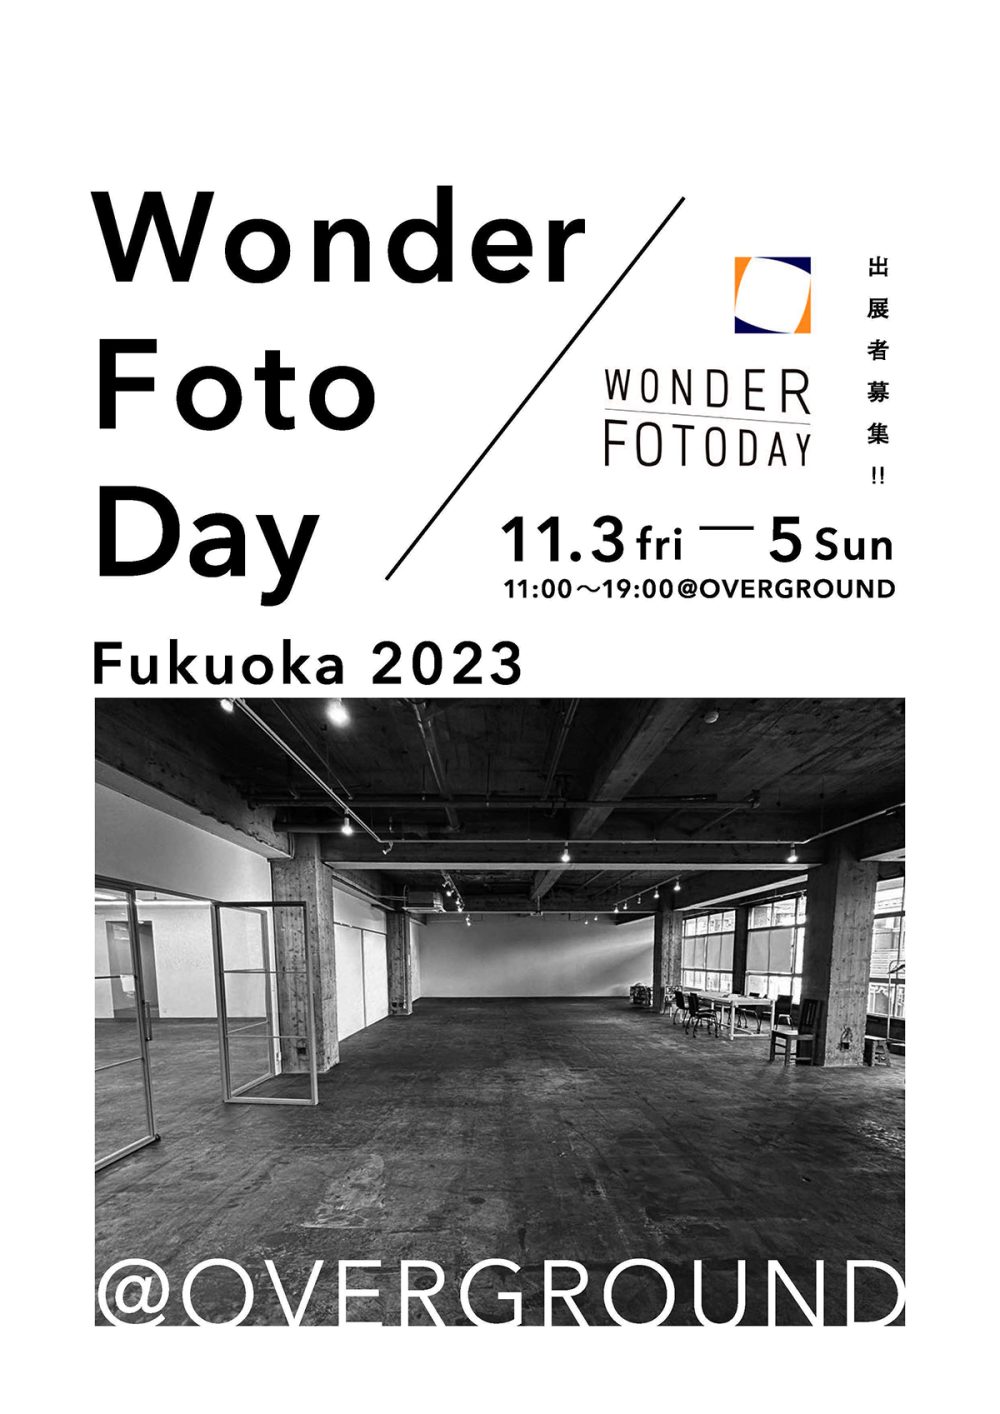 Wonder Foto Day Fukuoka 2023